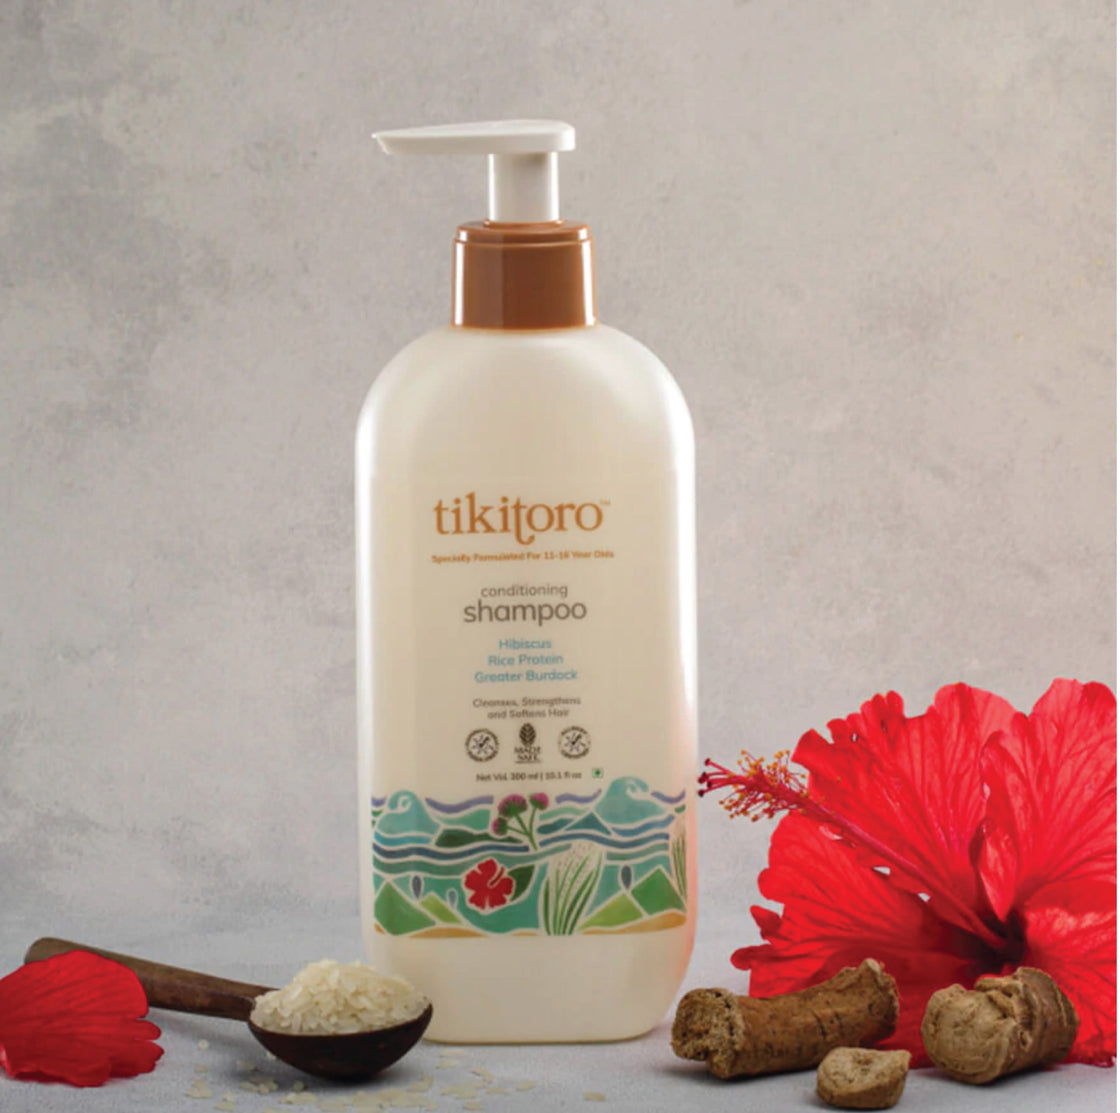 Tikitoro Conditioning Shampoo